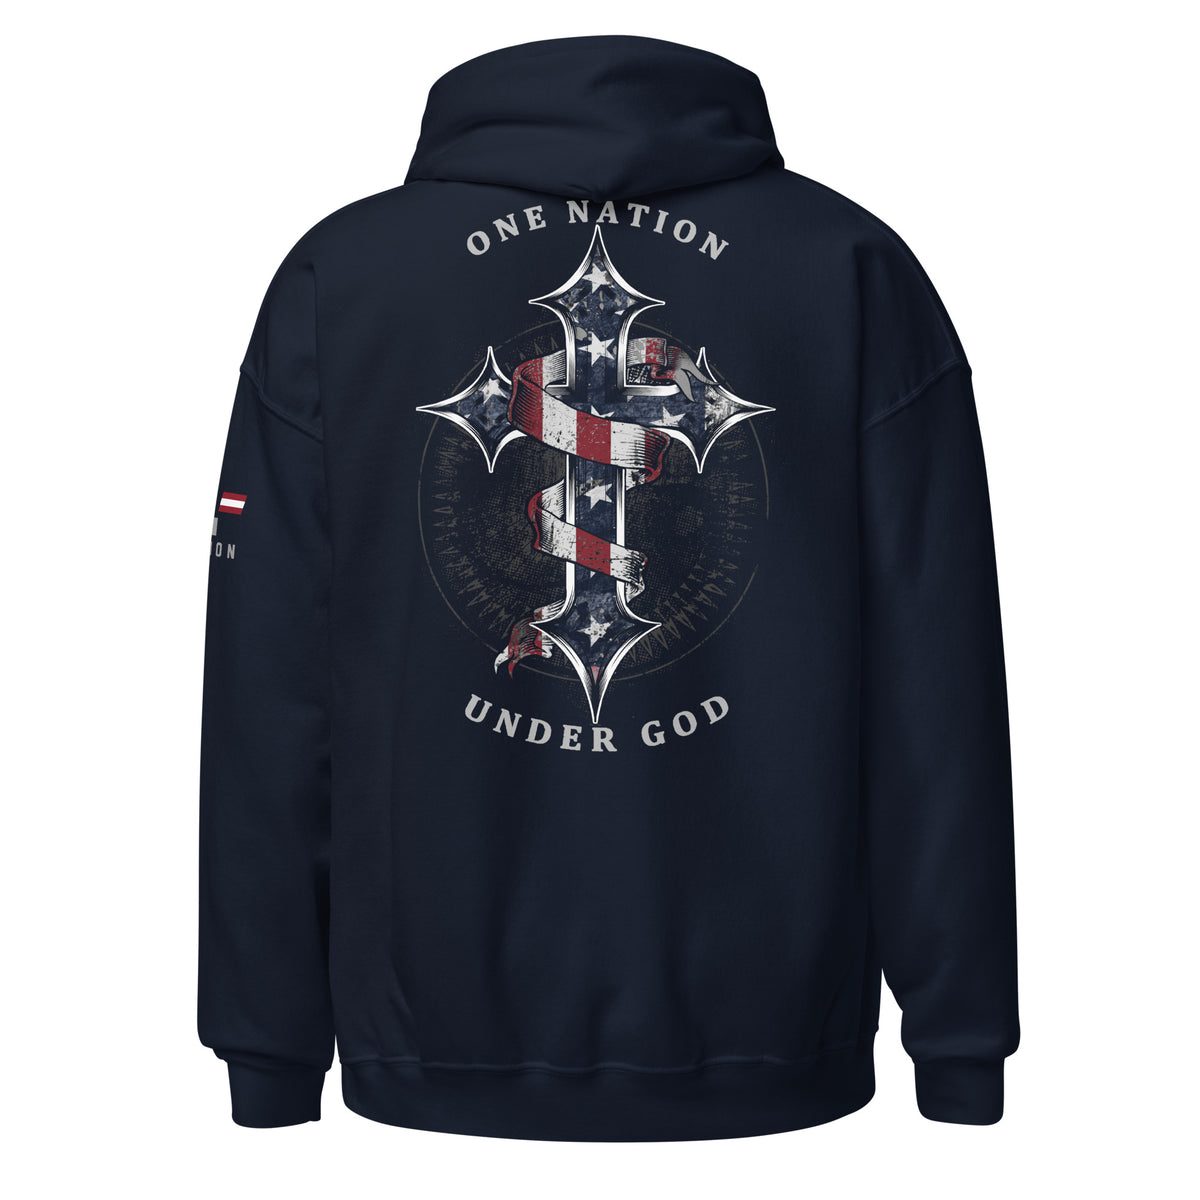 One Nation Under God: Original Hoodie